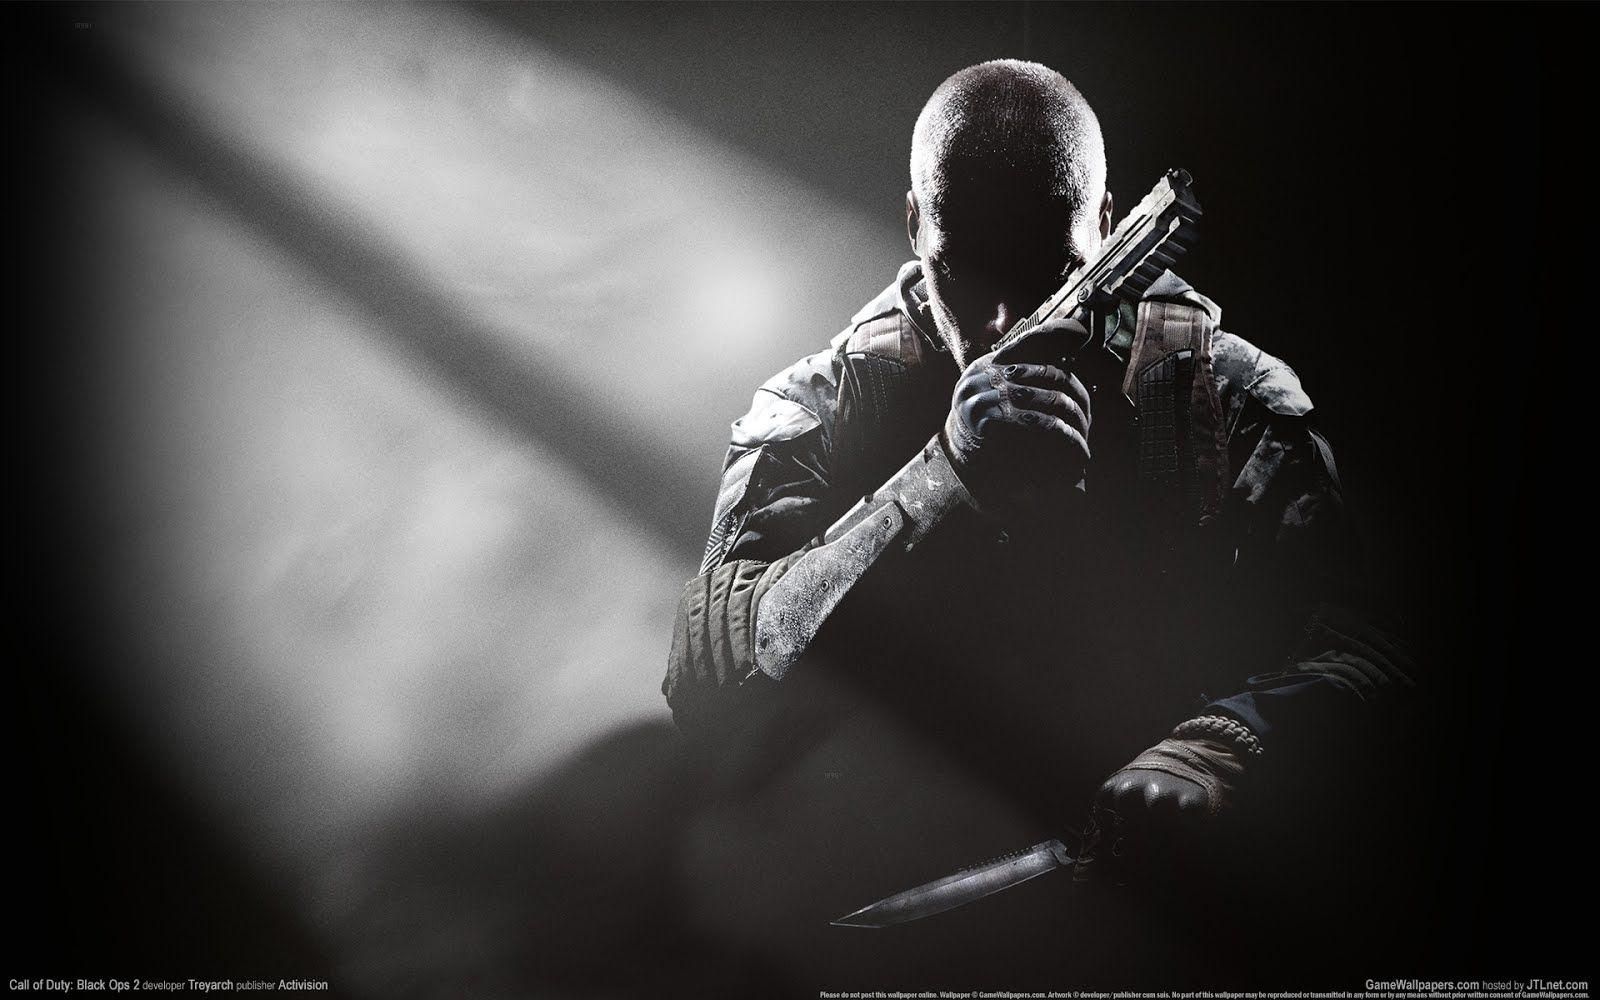 Call of Duty Black Ops II Wallpaper Free Download Wallpaper. Call of duty, Xbox one, Xbox